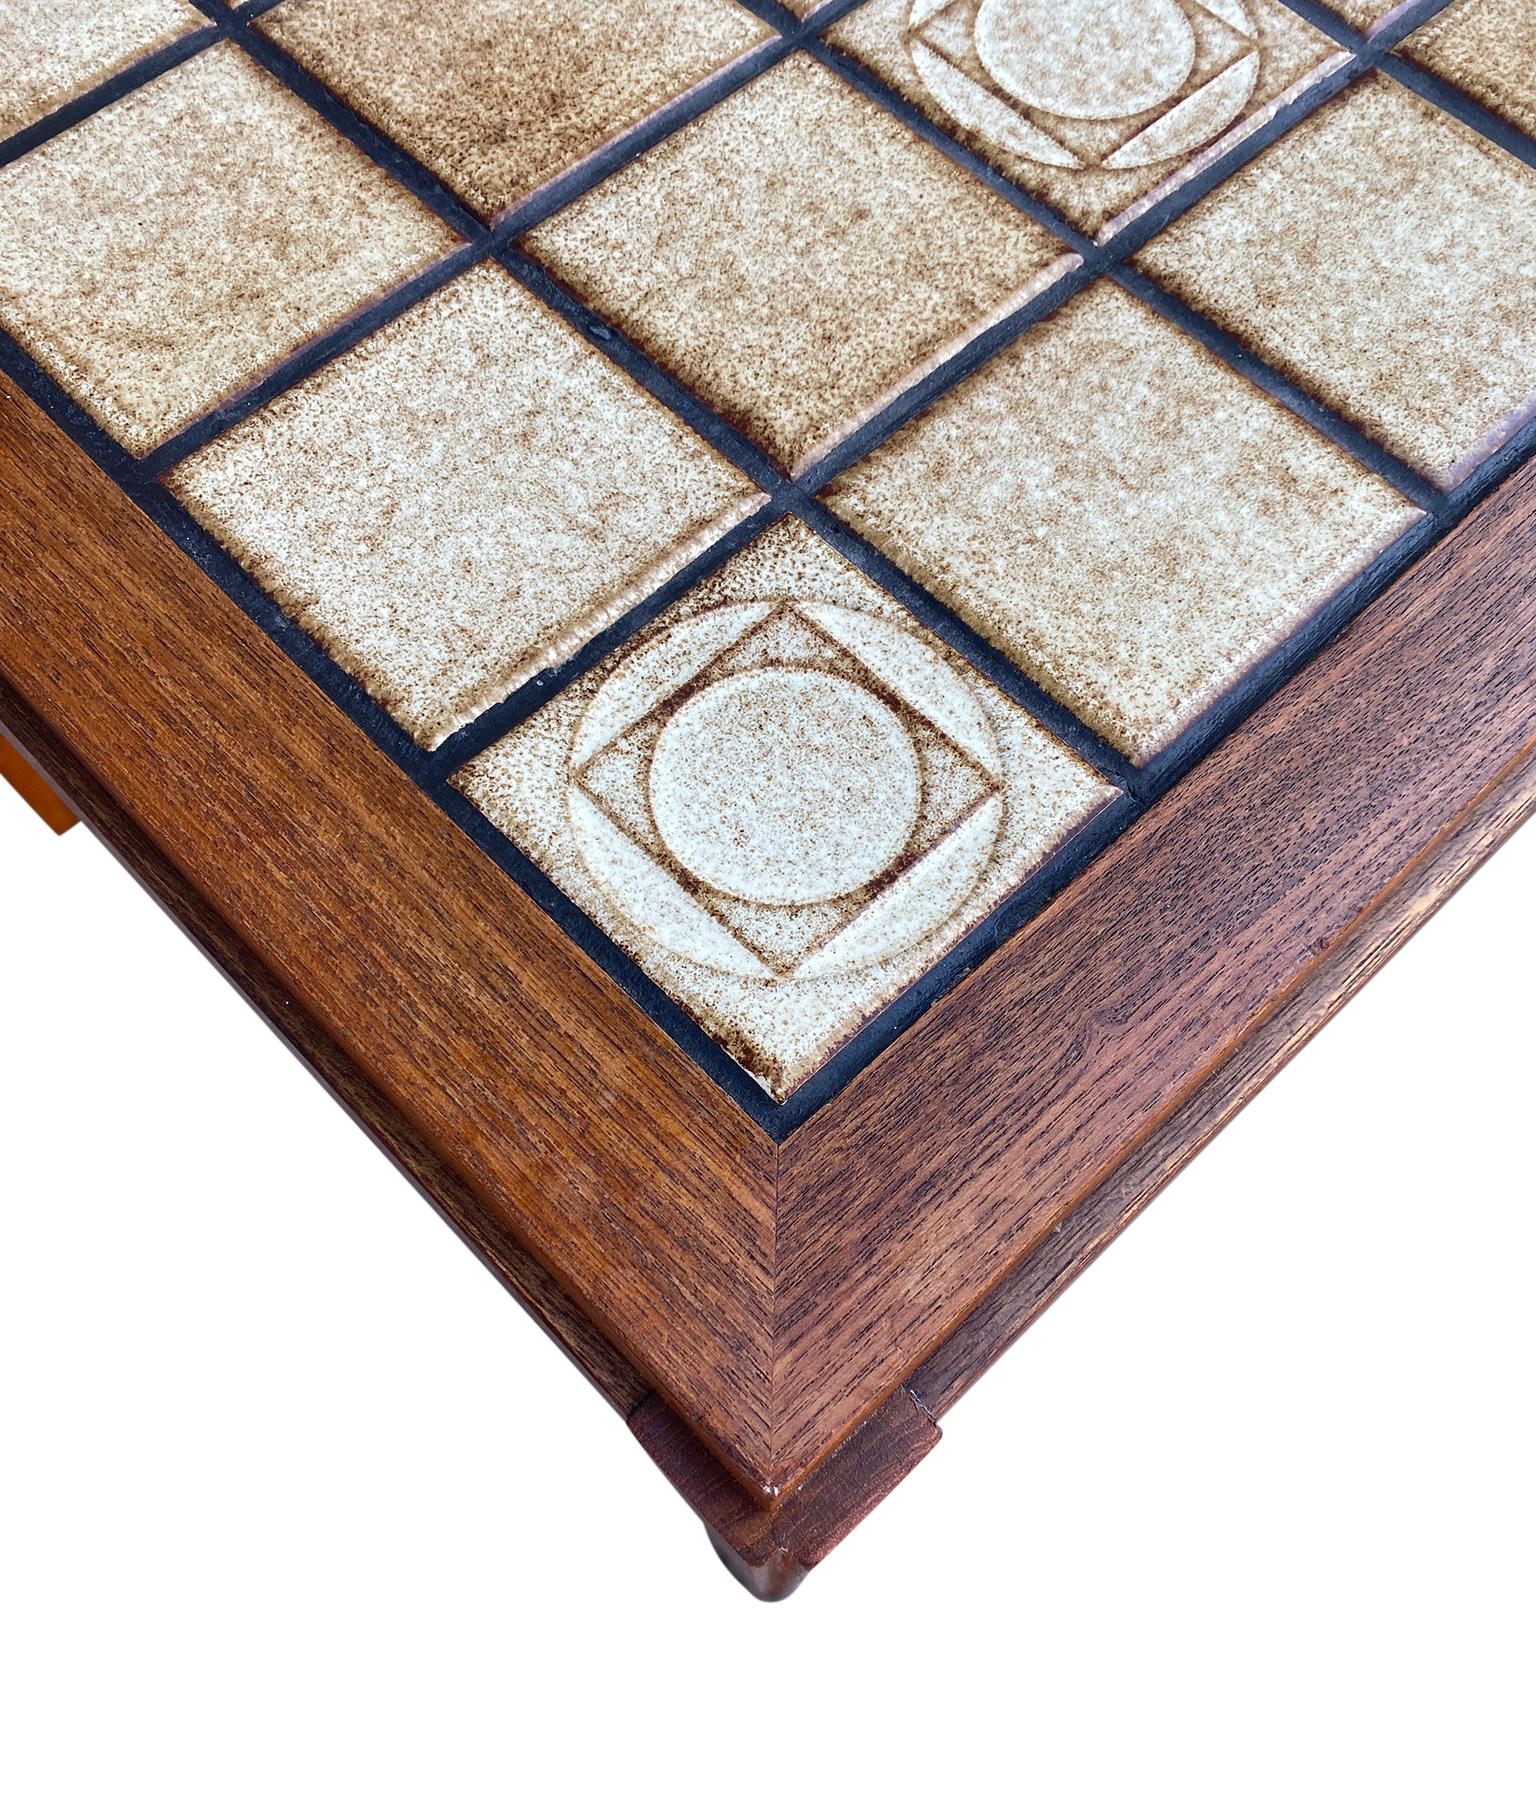 Mid-Century Modern Midcentury Danish Modern Teak Ceramic Tile Coffee Table Bench For Sale